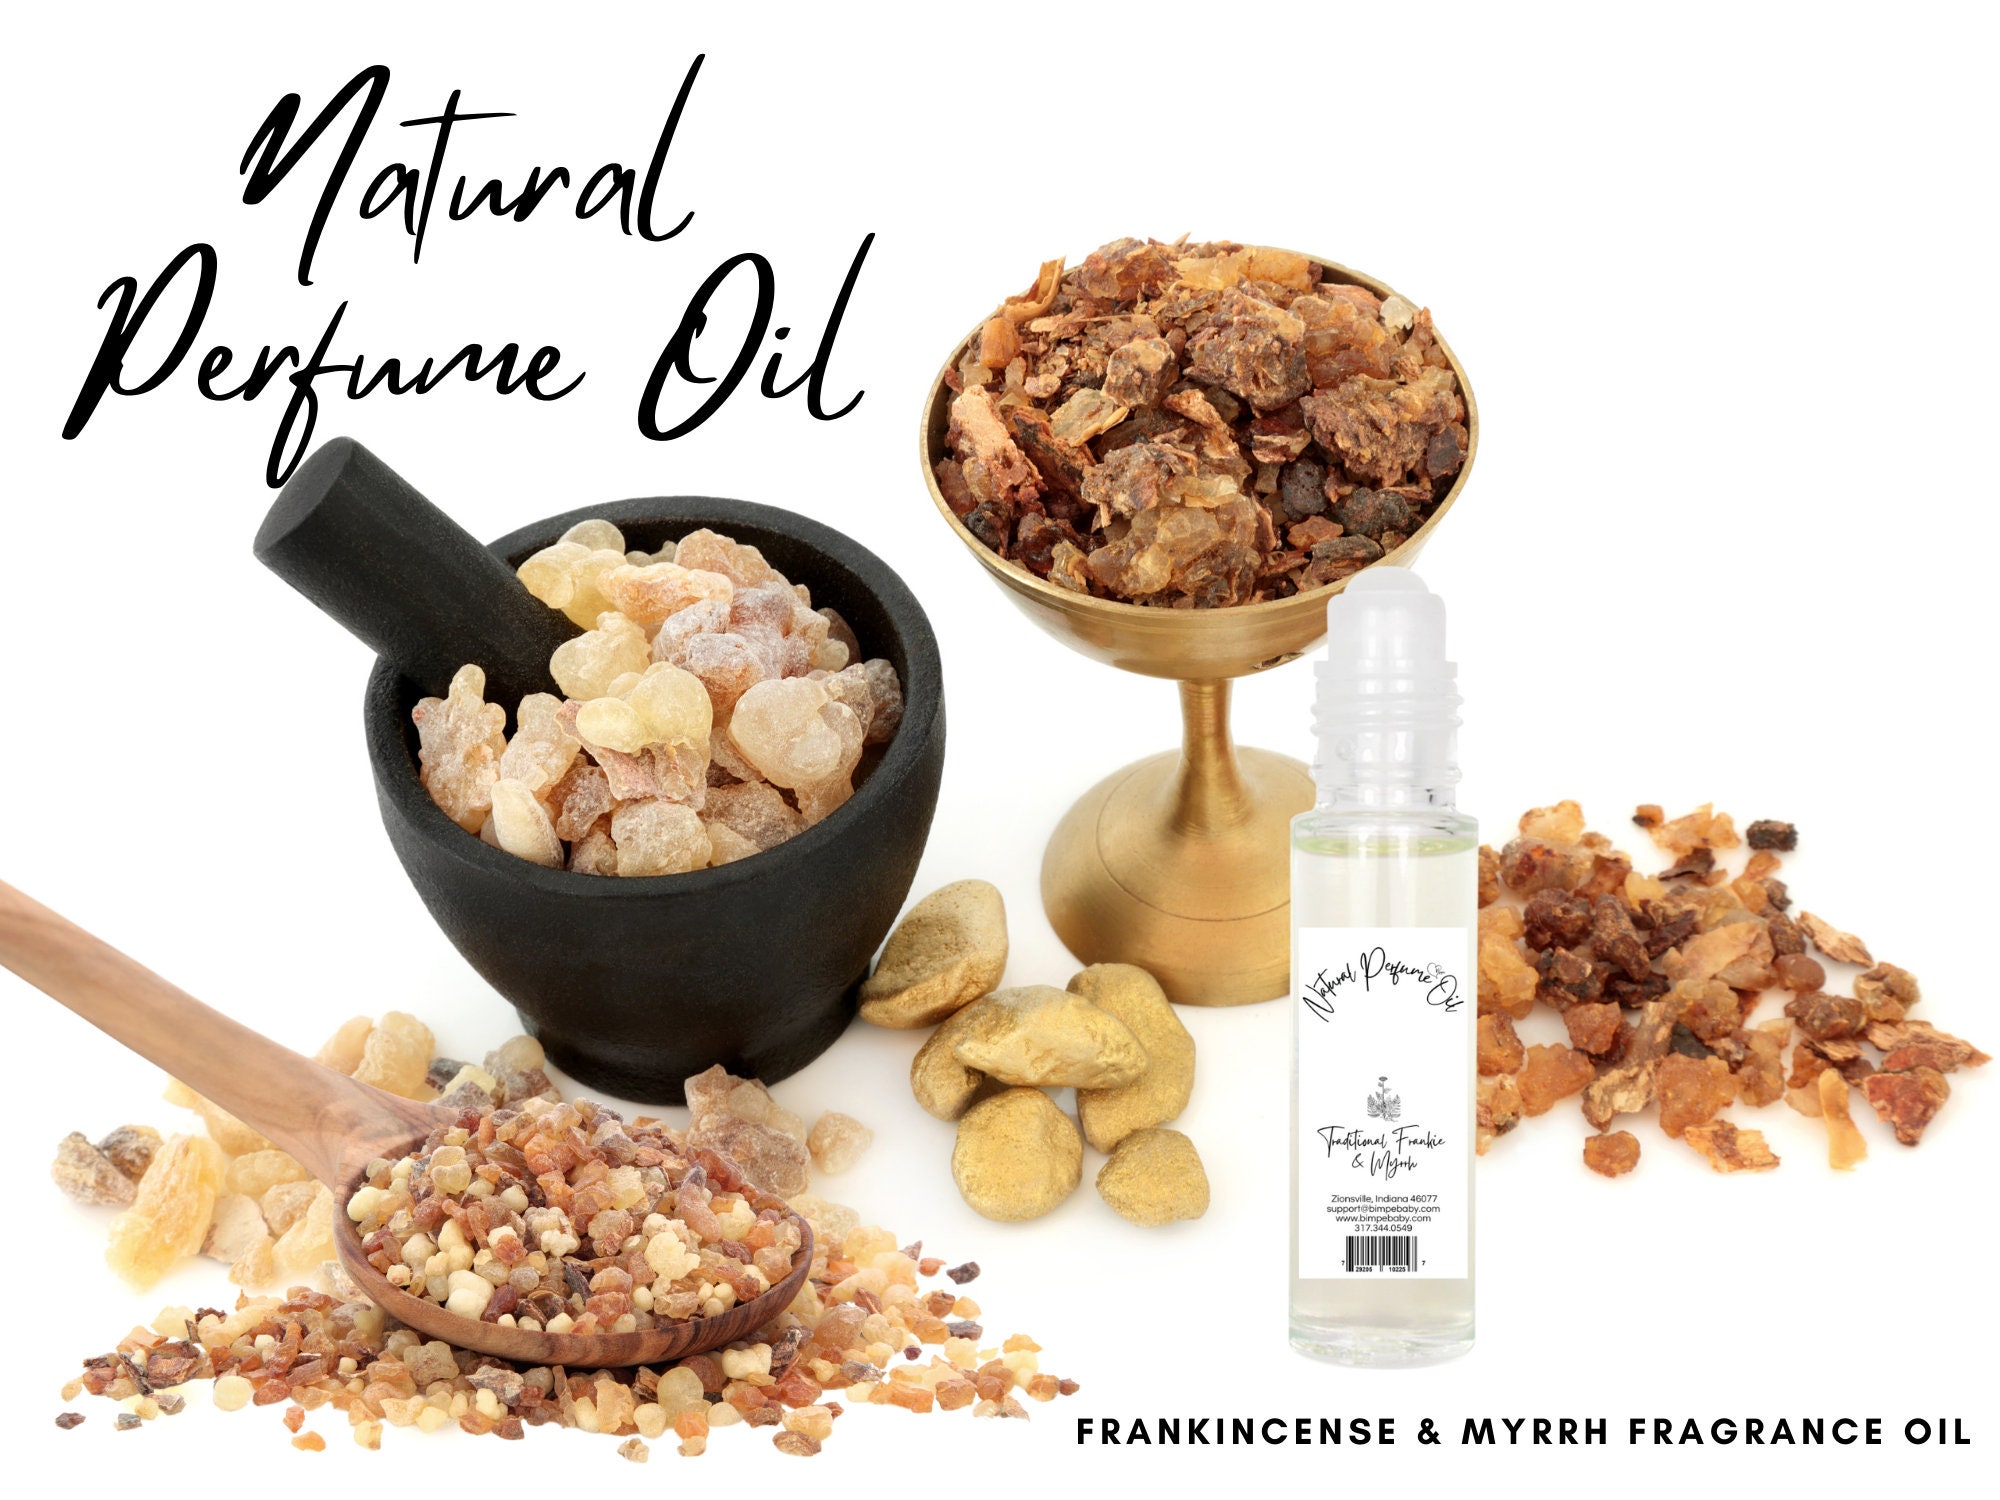 Frankincense and Myrrh Naturally Derived Fragrance